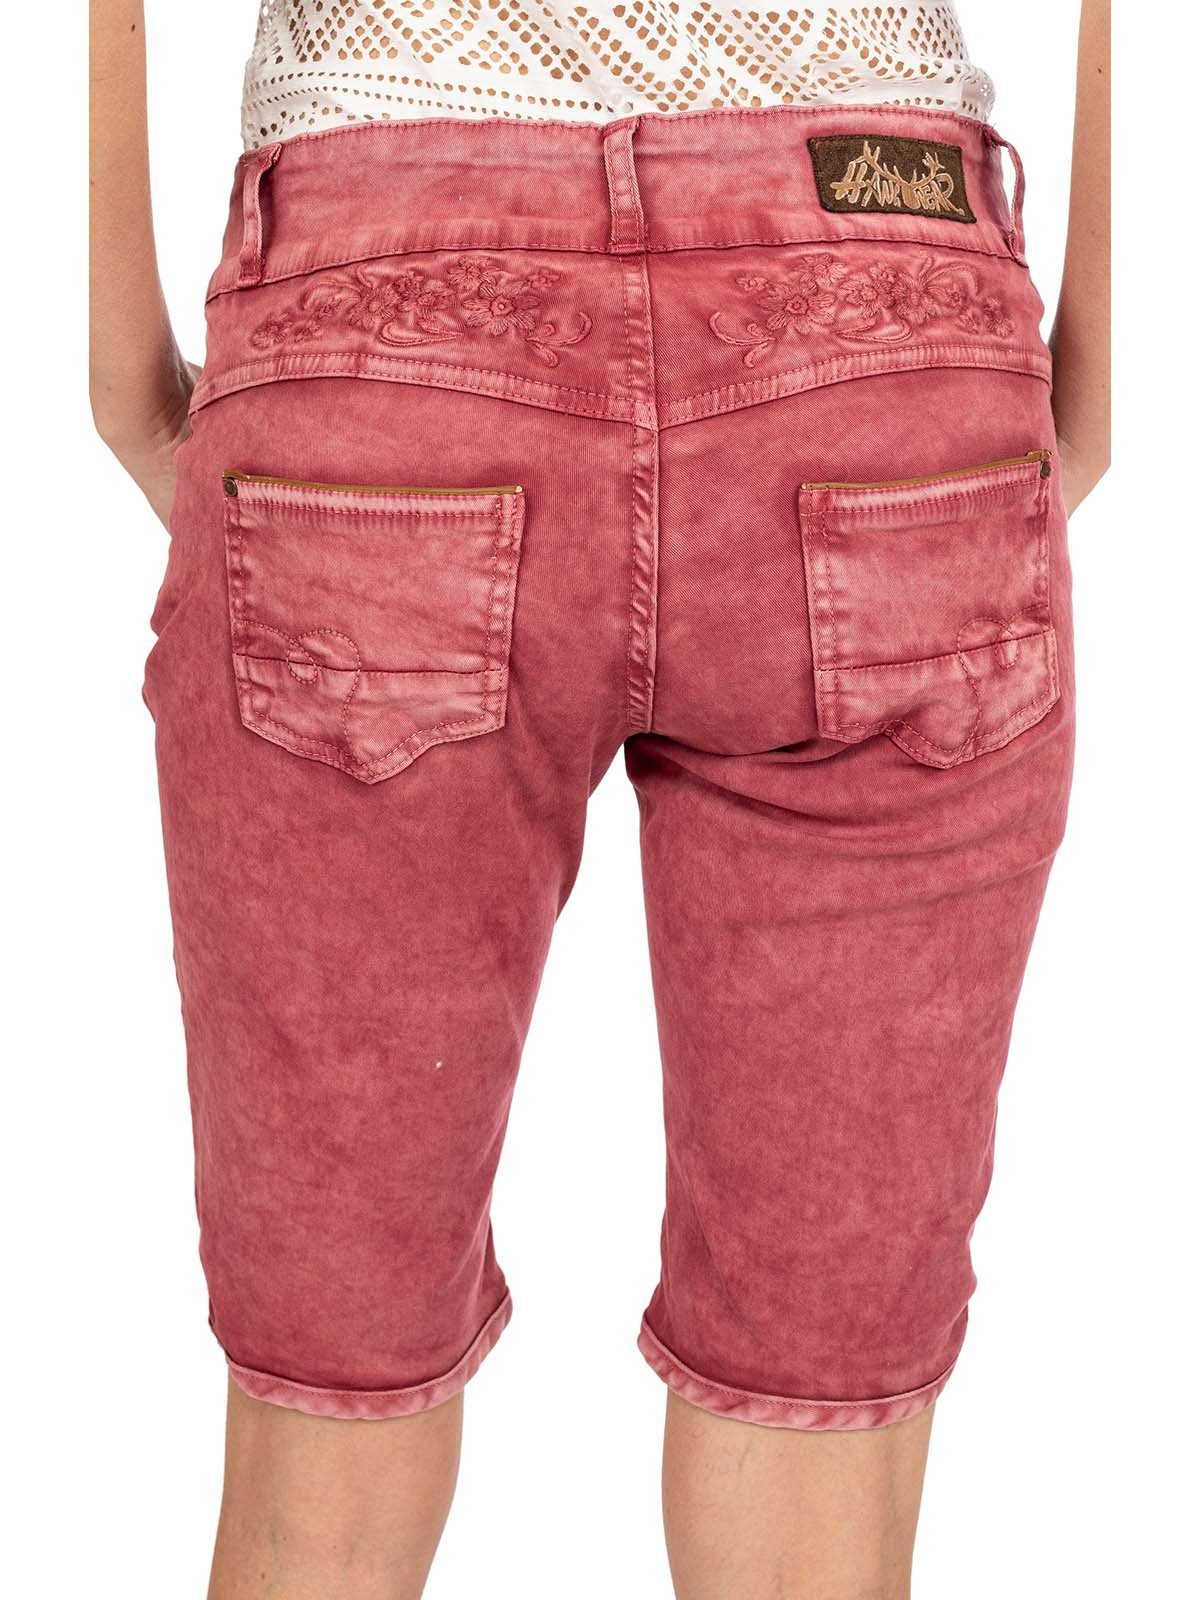 OVIDA weinrot Bermuda Trachtenhose Hangowear Jeans